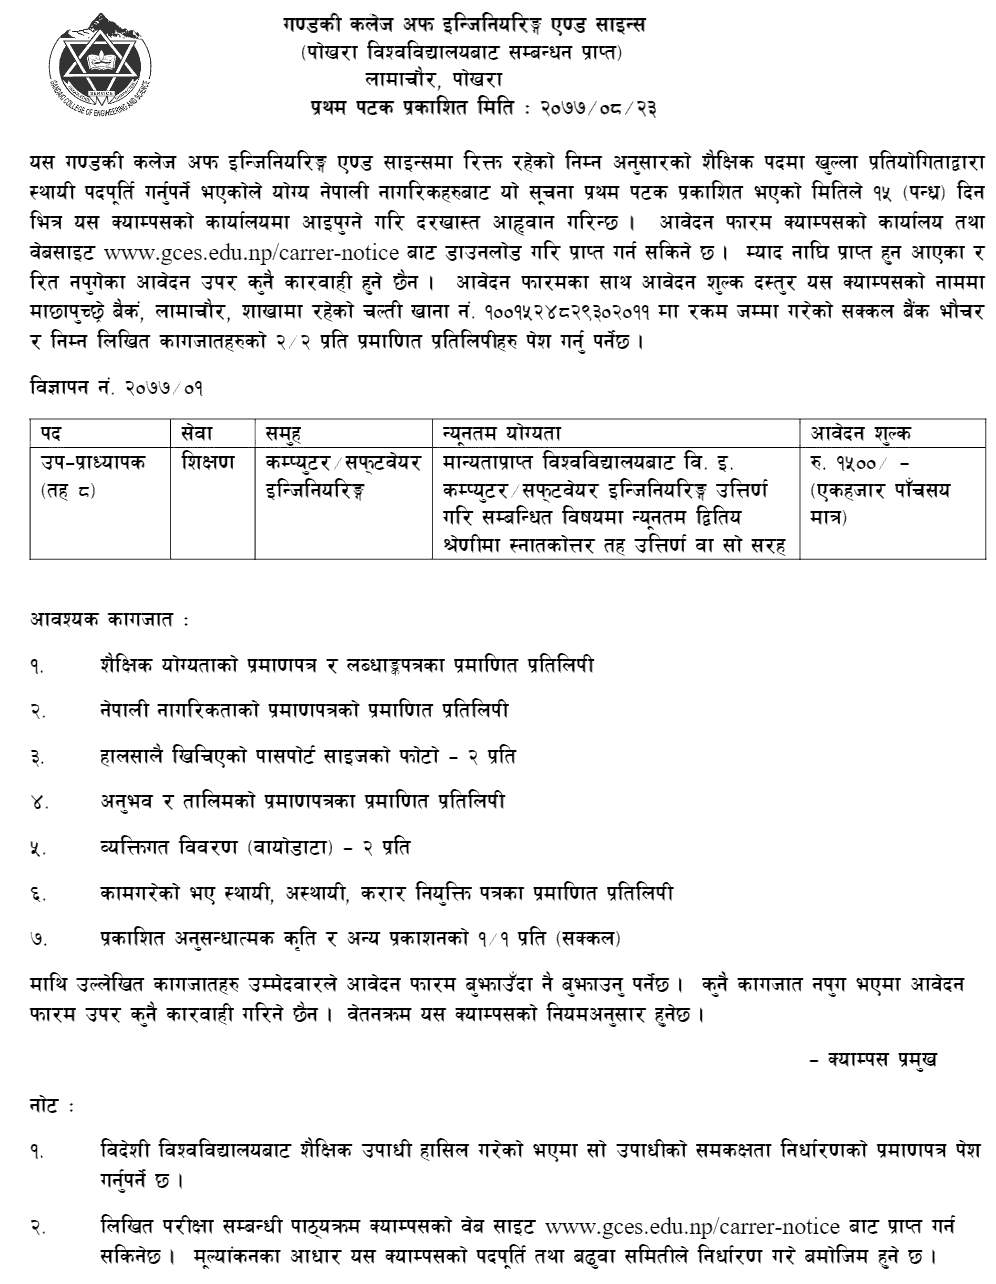 Gandaki College of Engineering and Science Vacancy for Assistant Professor